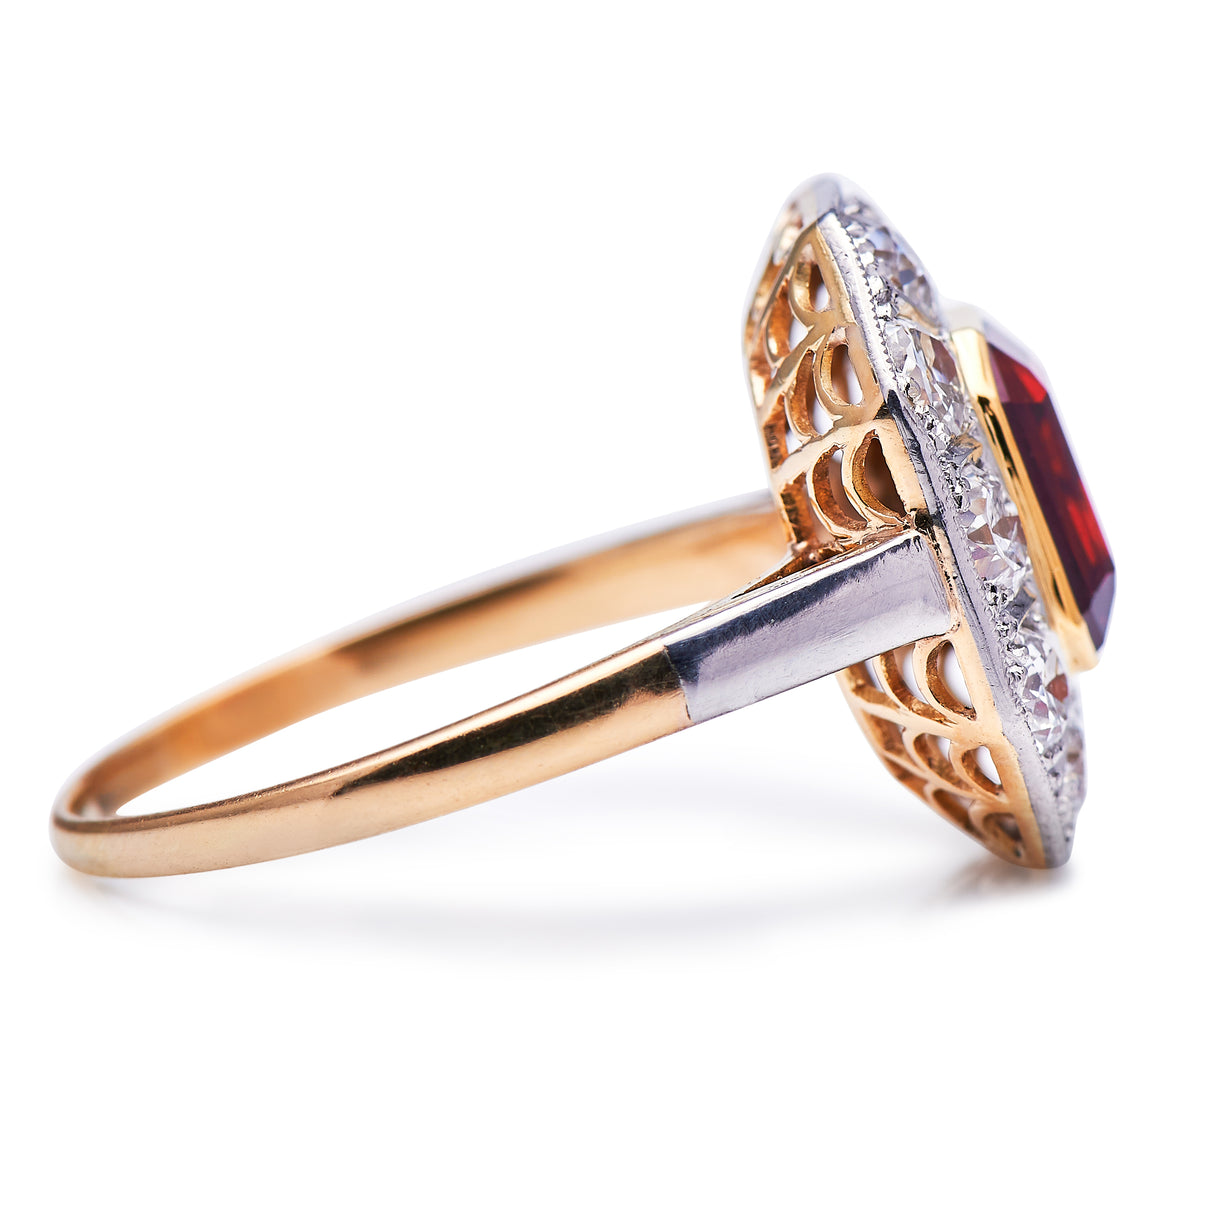 Art Deco, 18ct Gold, Platinum, Hessonite Garnet and Diamond Ring